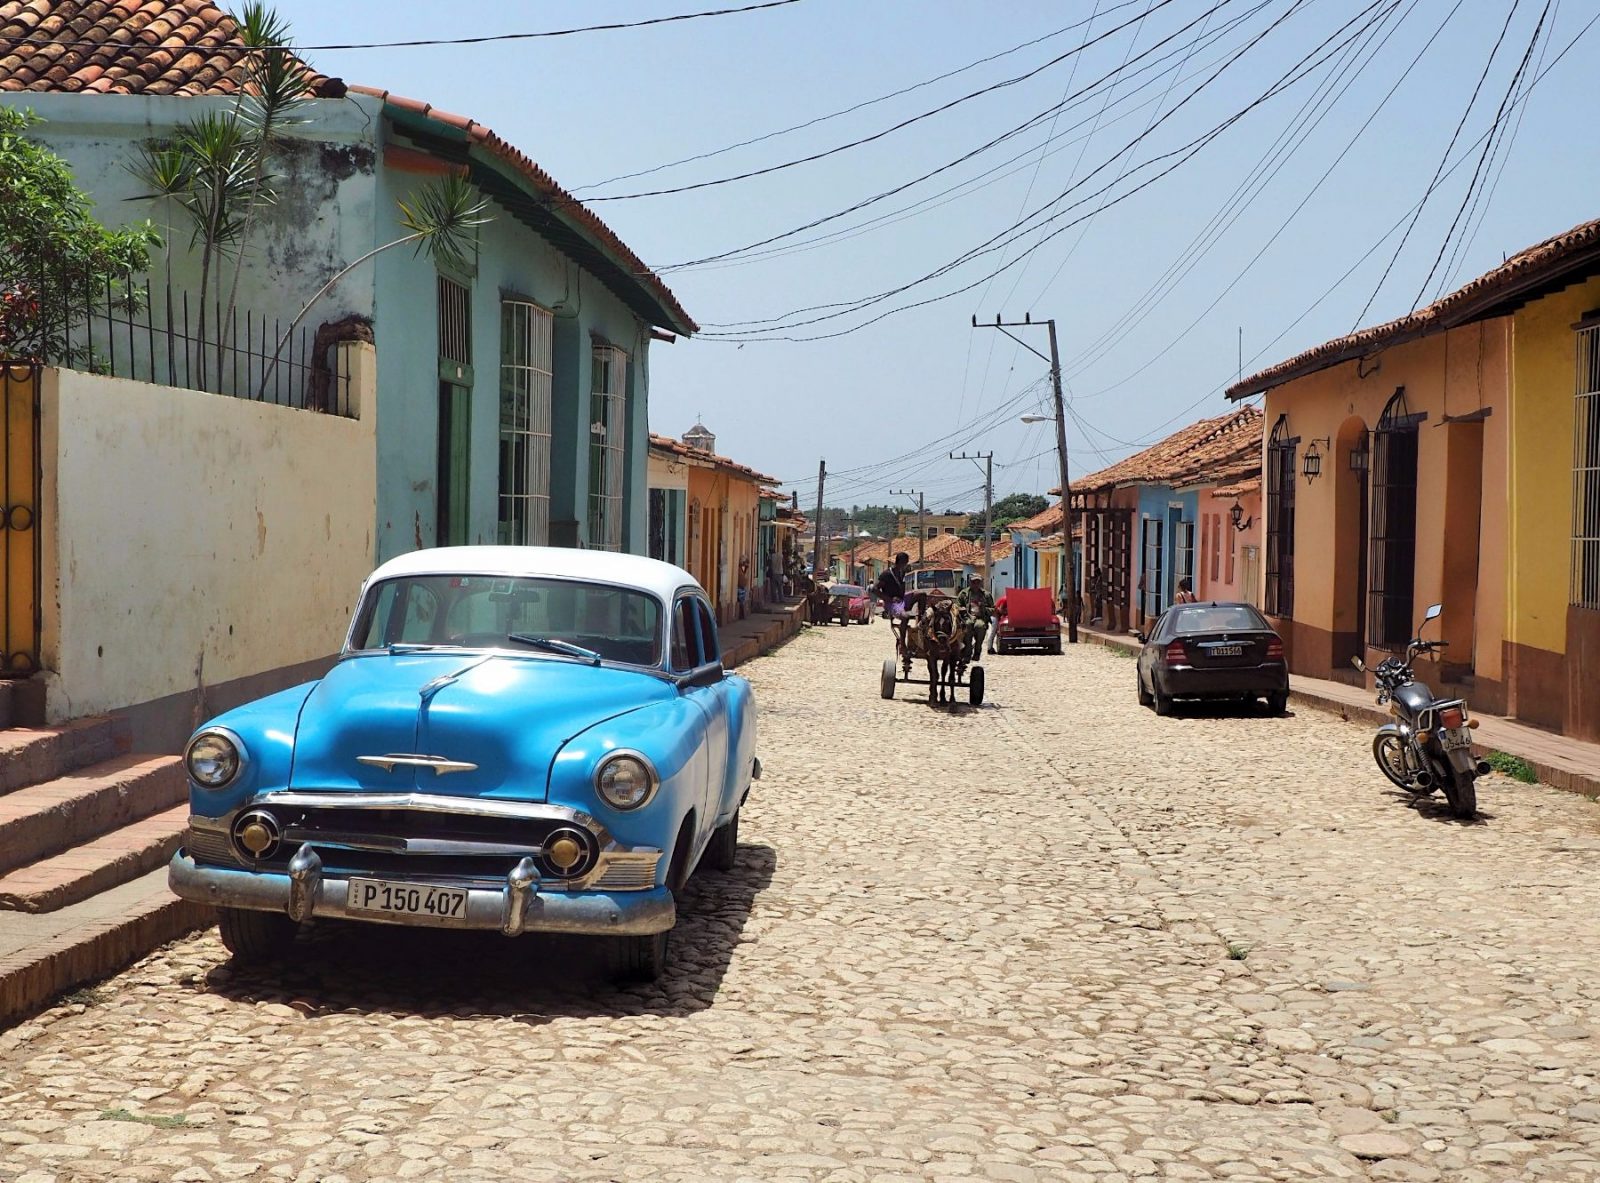 cobblestone streets in the city of Trinidad